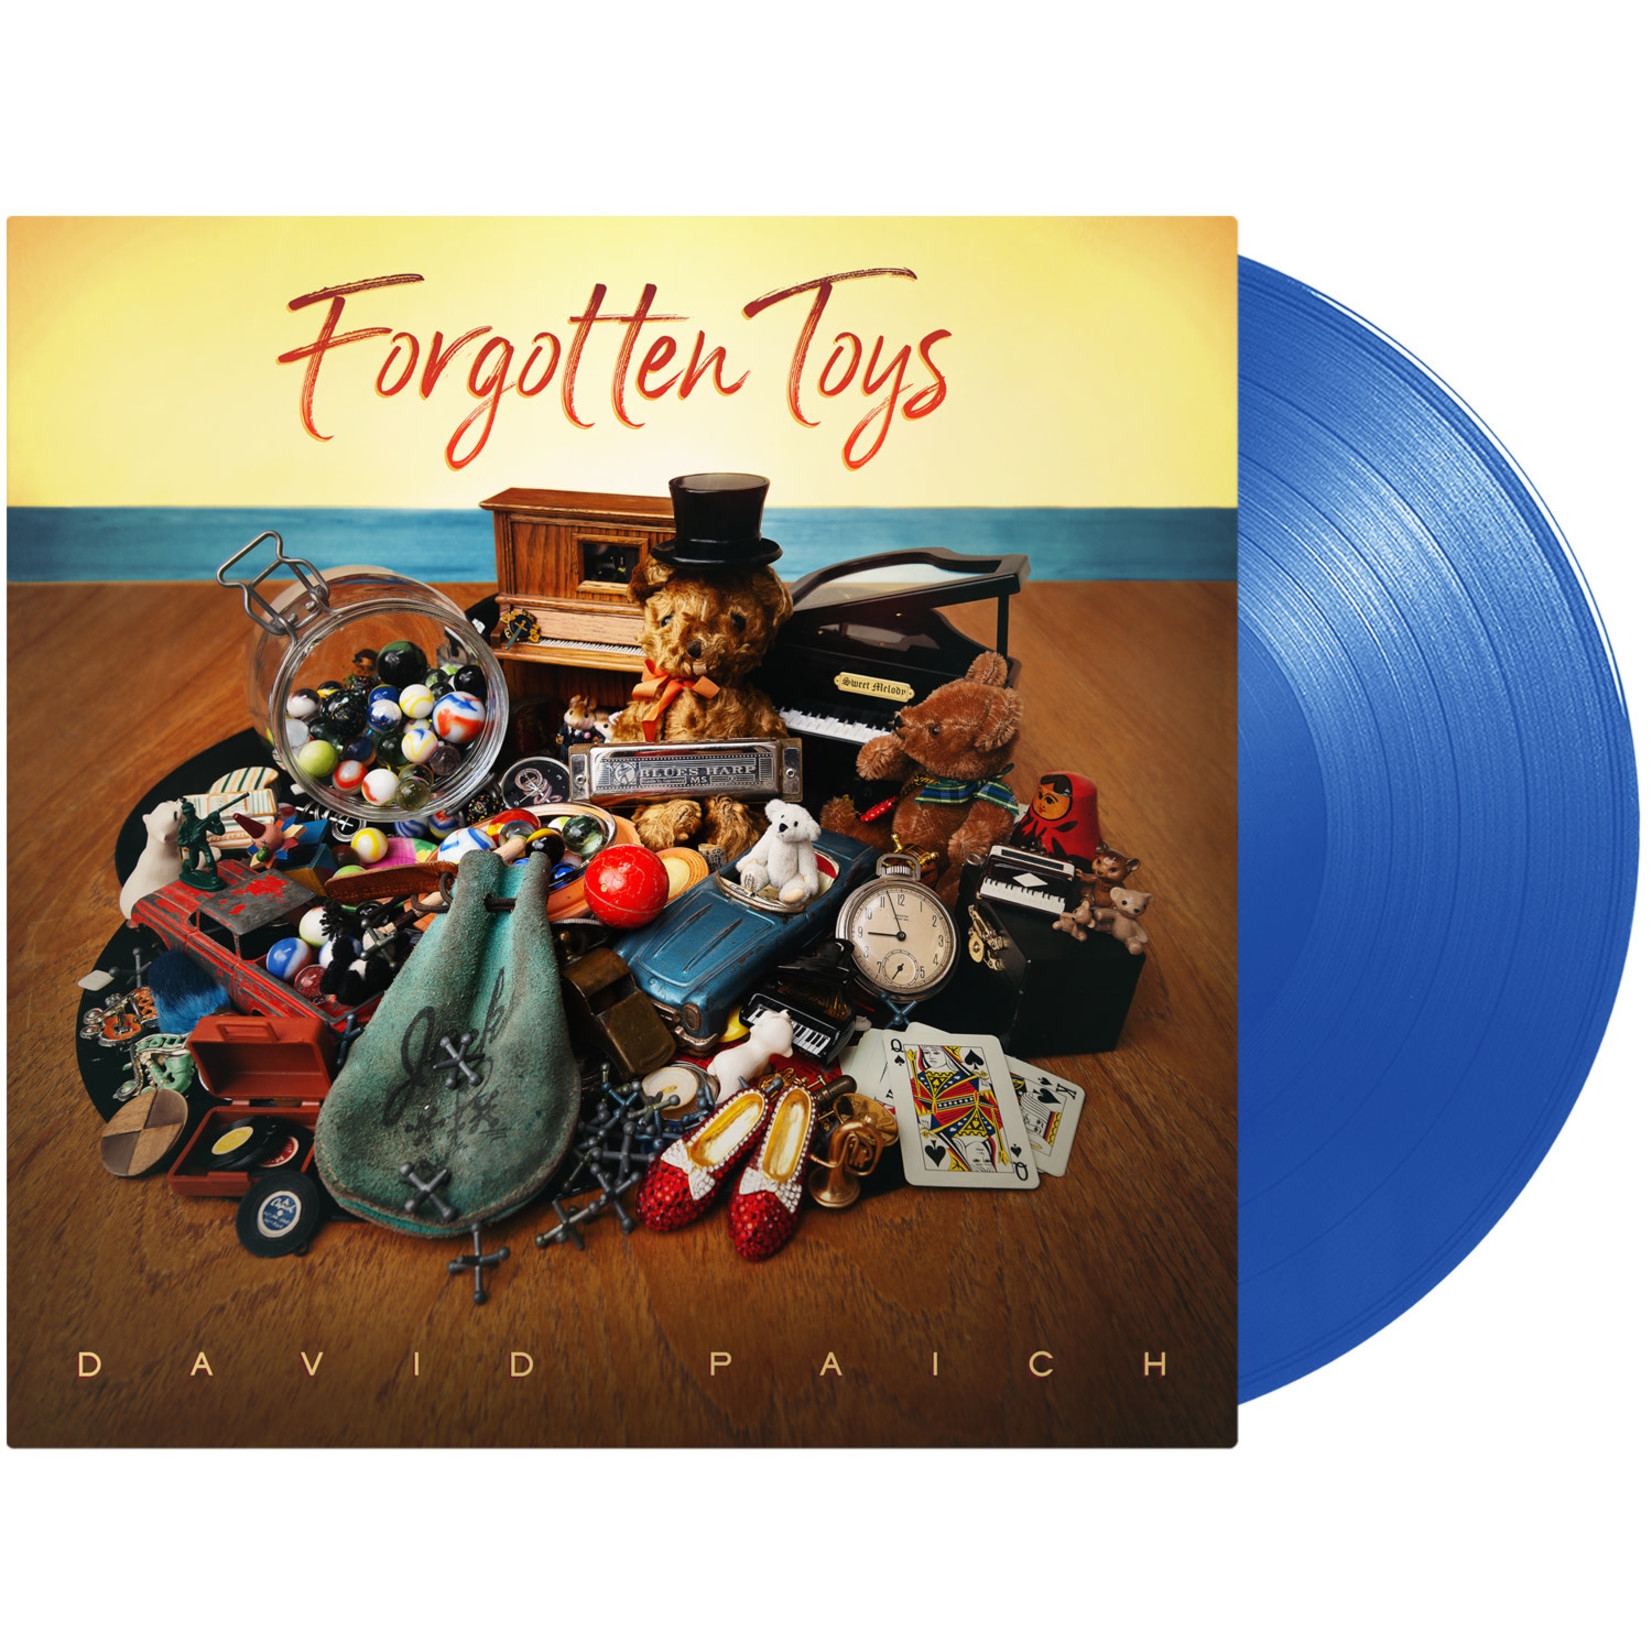 [New] David Paich - Forgotten Toys (transparent blue vinyl)